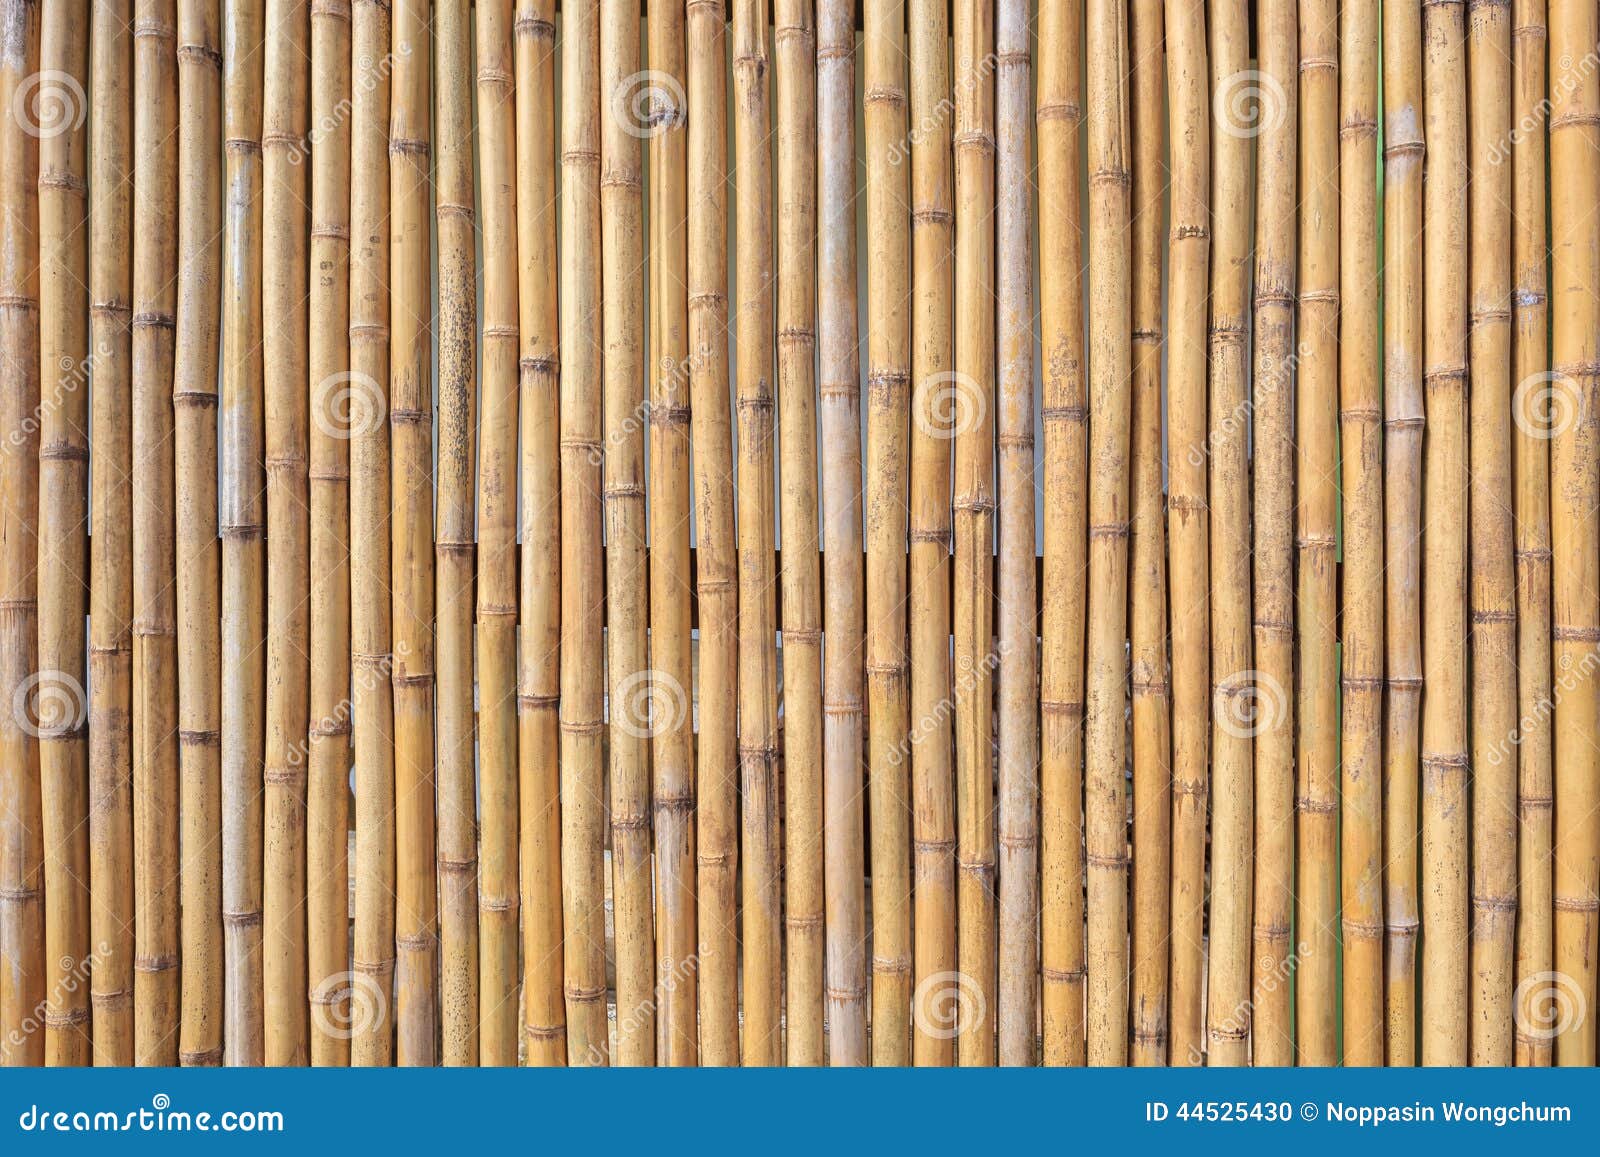  Mur  en bambou  photo stock Image du lumber fond 